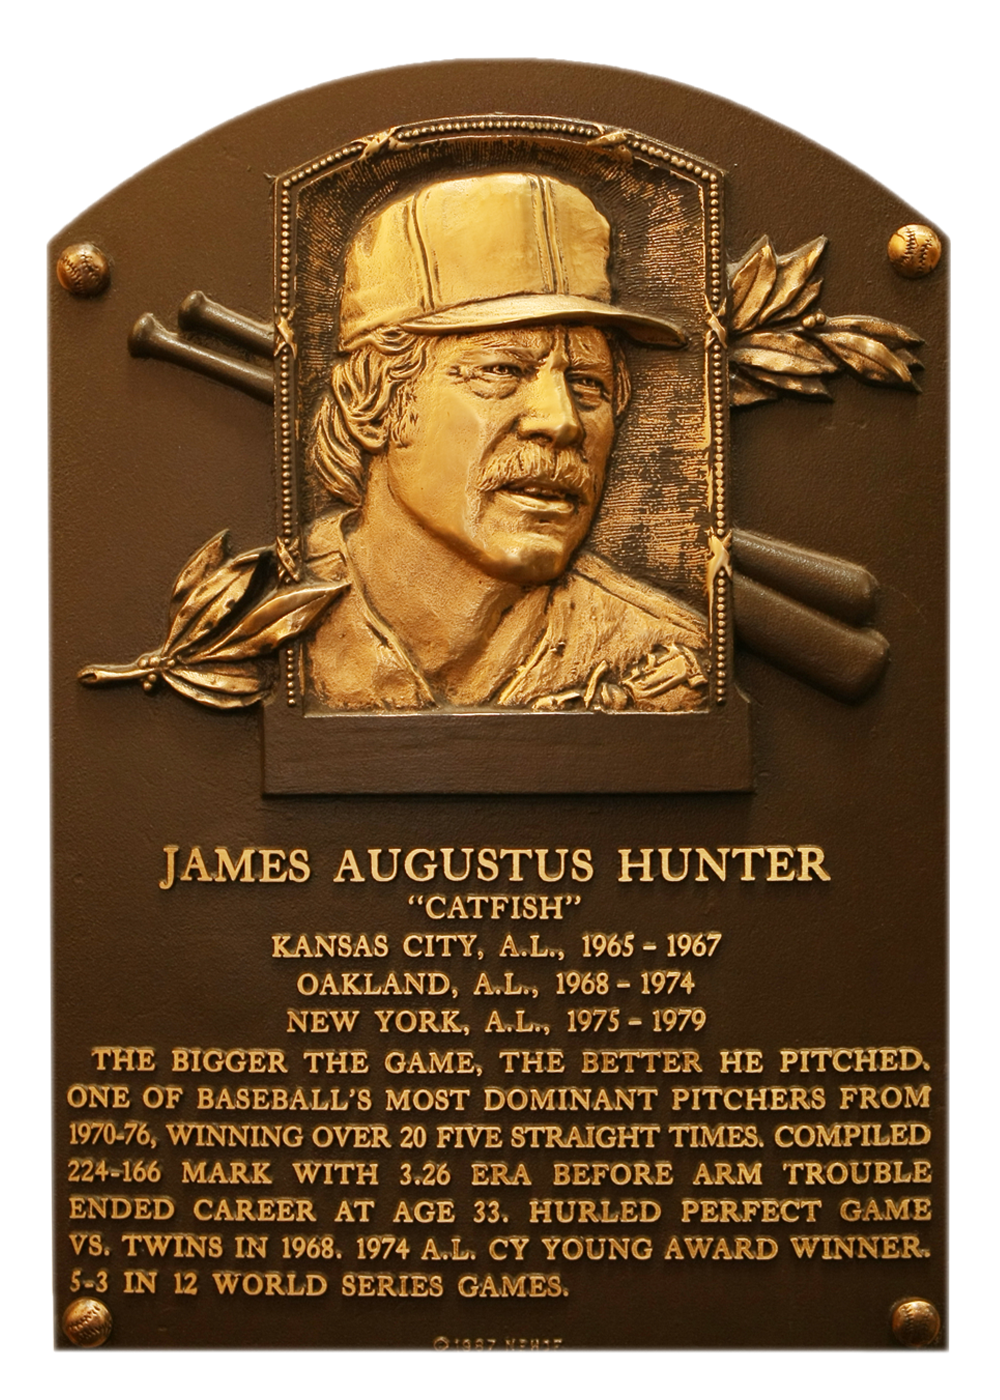 Catfish Hunter Hall of Fame plaque